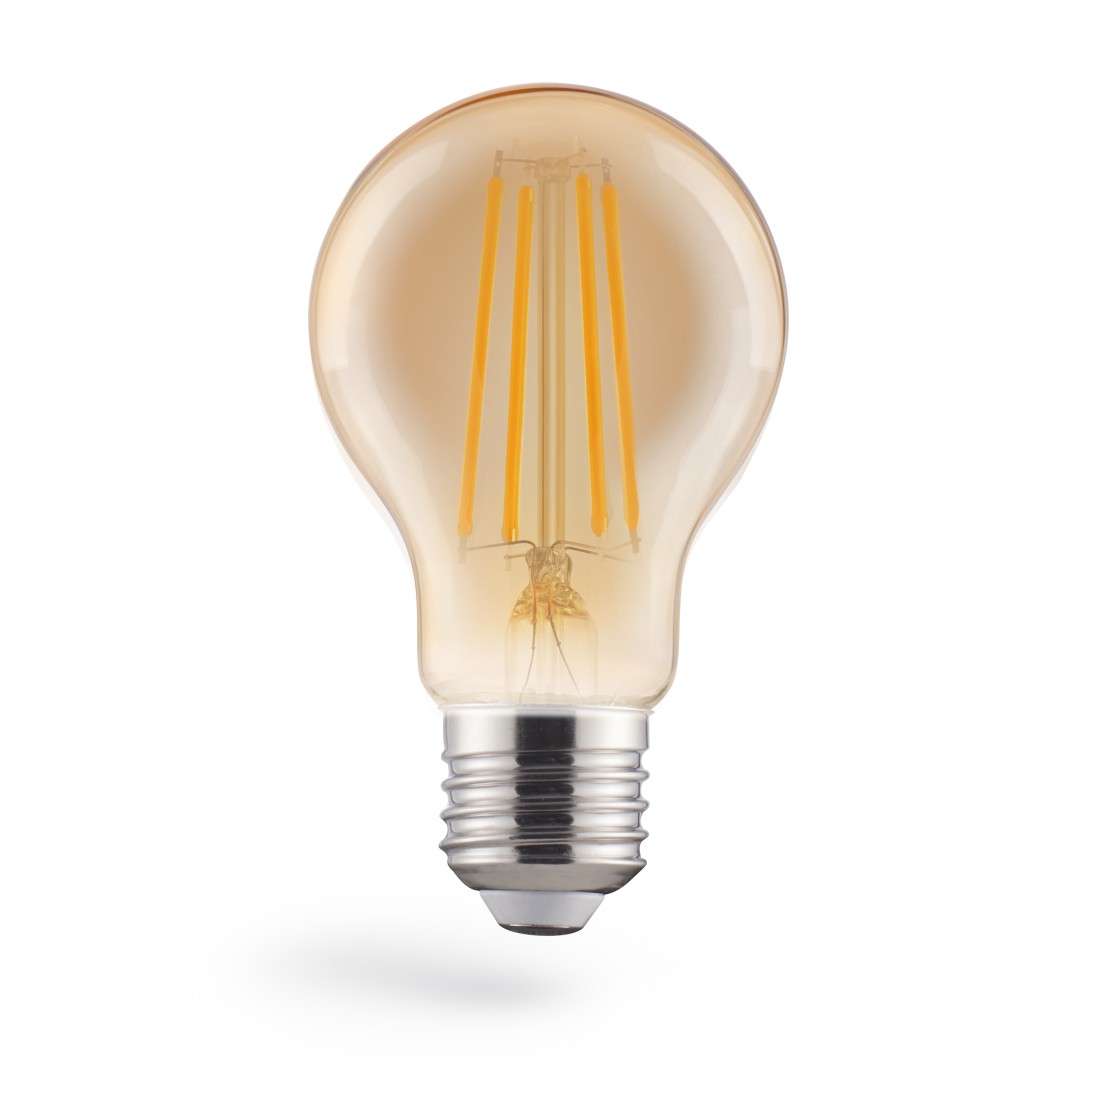 XAVAX LED -Filament, E27, 600lm 8W, Vintage-Lampe Glühlampe, dimmbar, Warmweiß